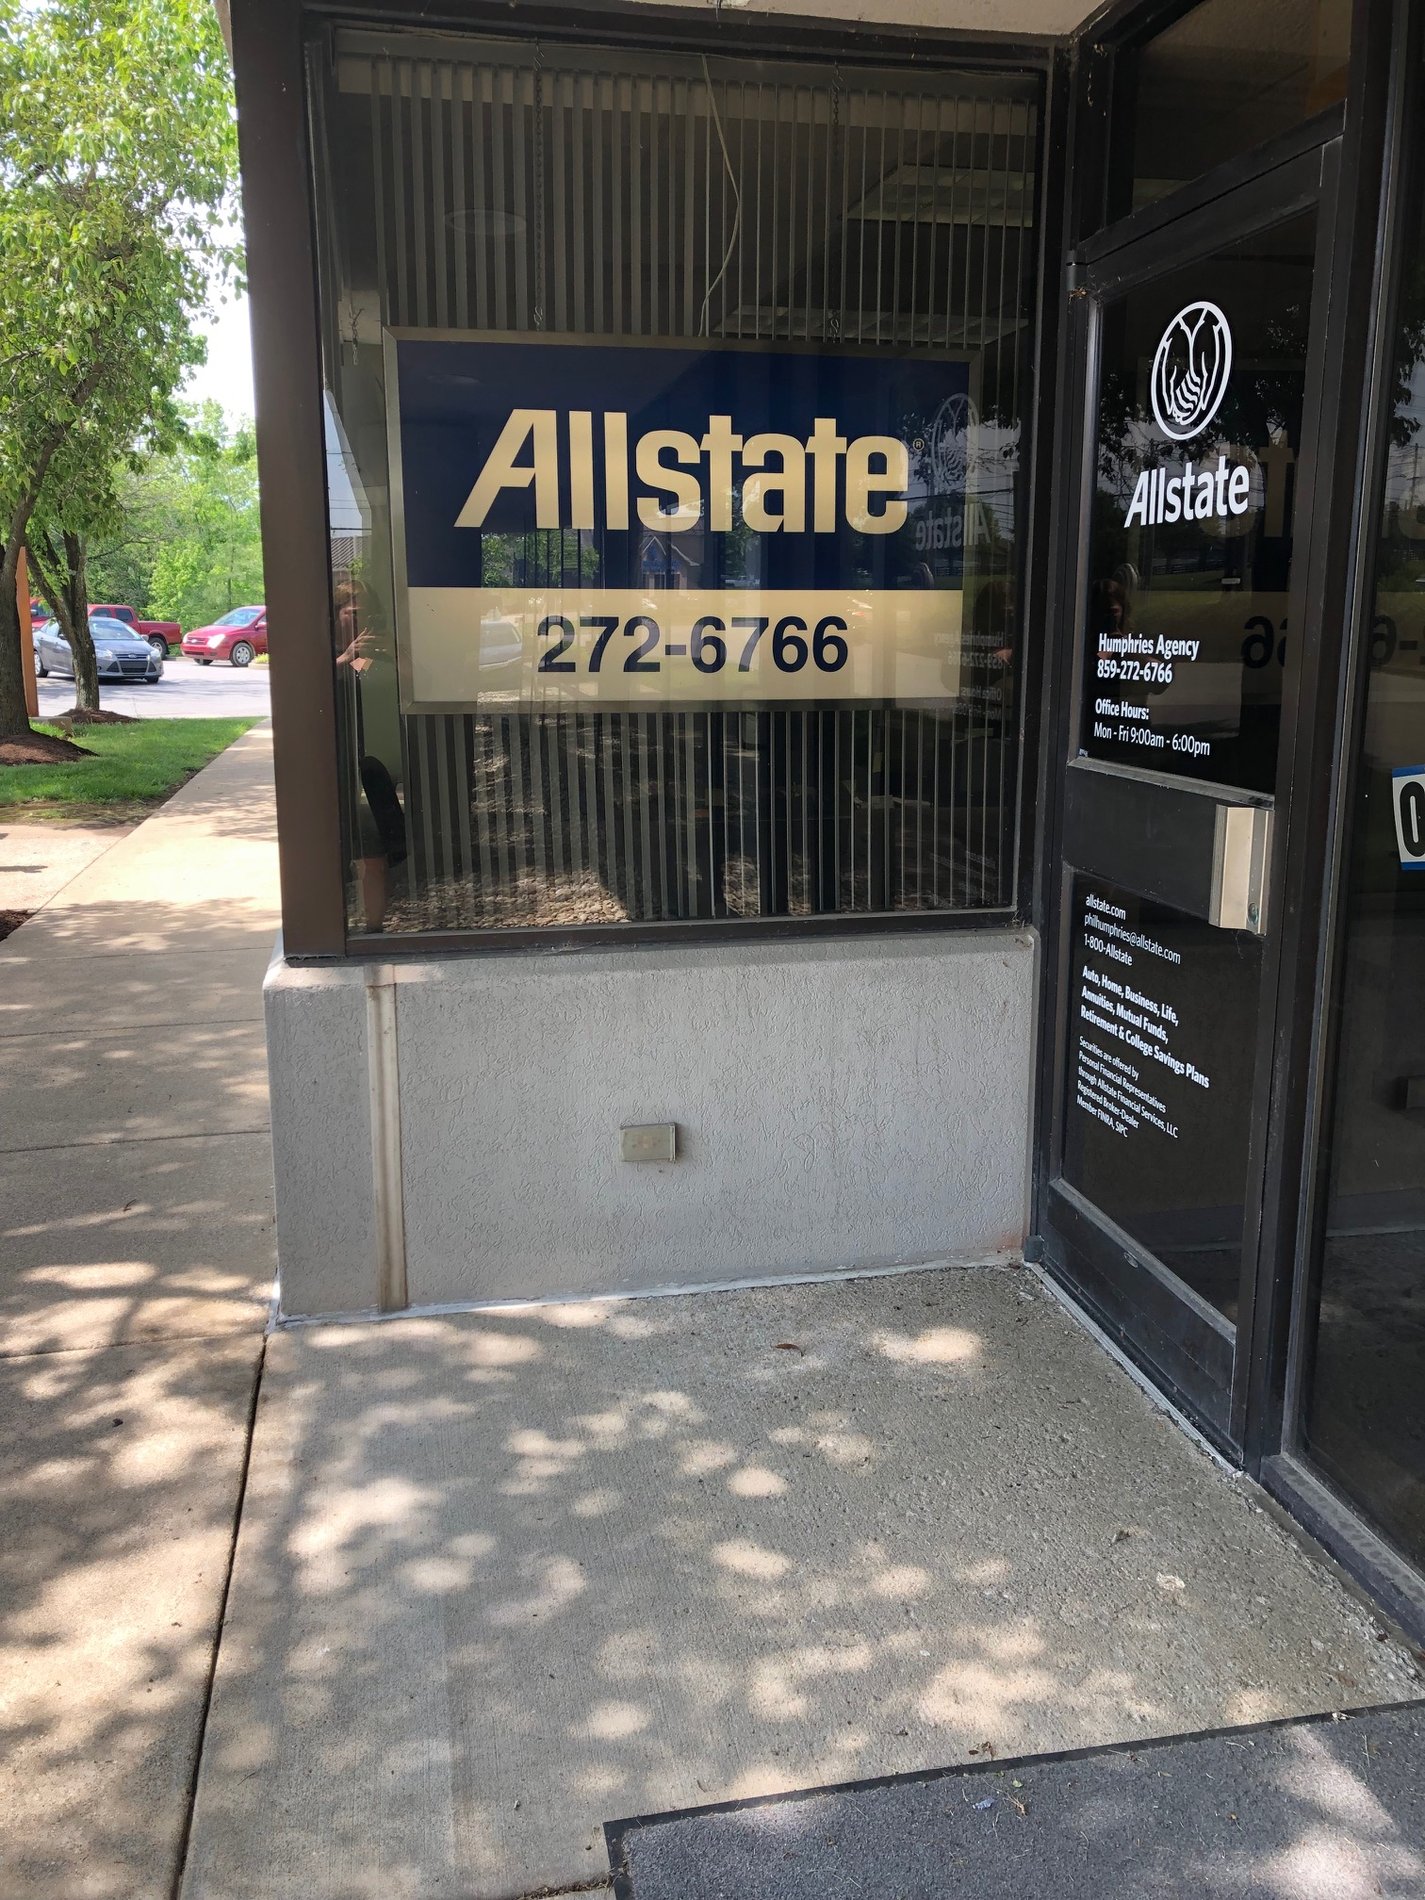 Allstate | Car Insurance in Lexington, KY - Philip Humphries